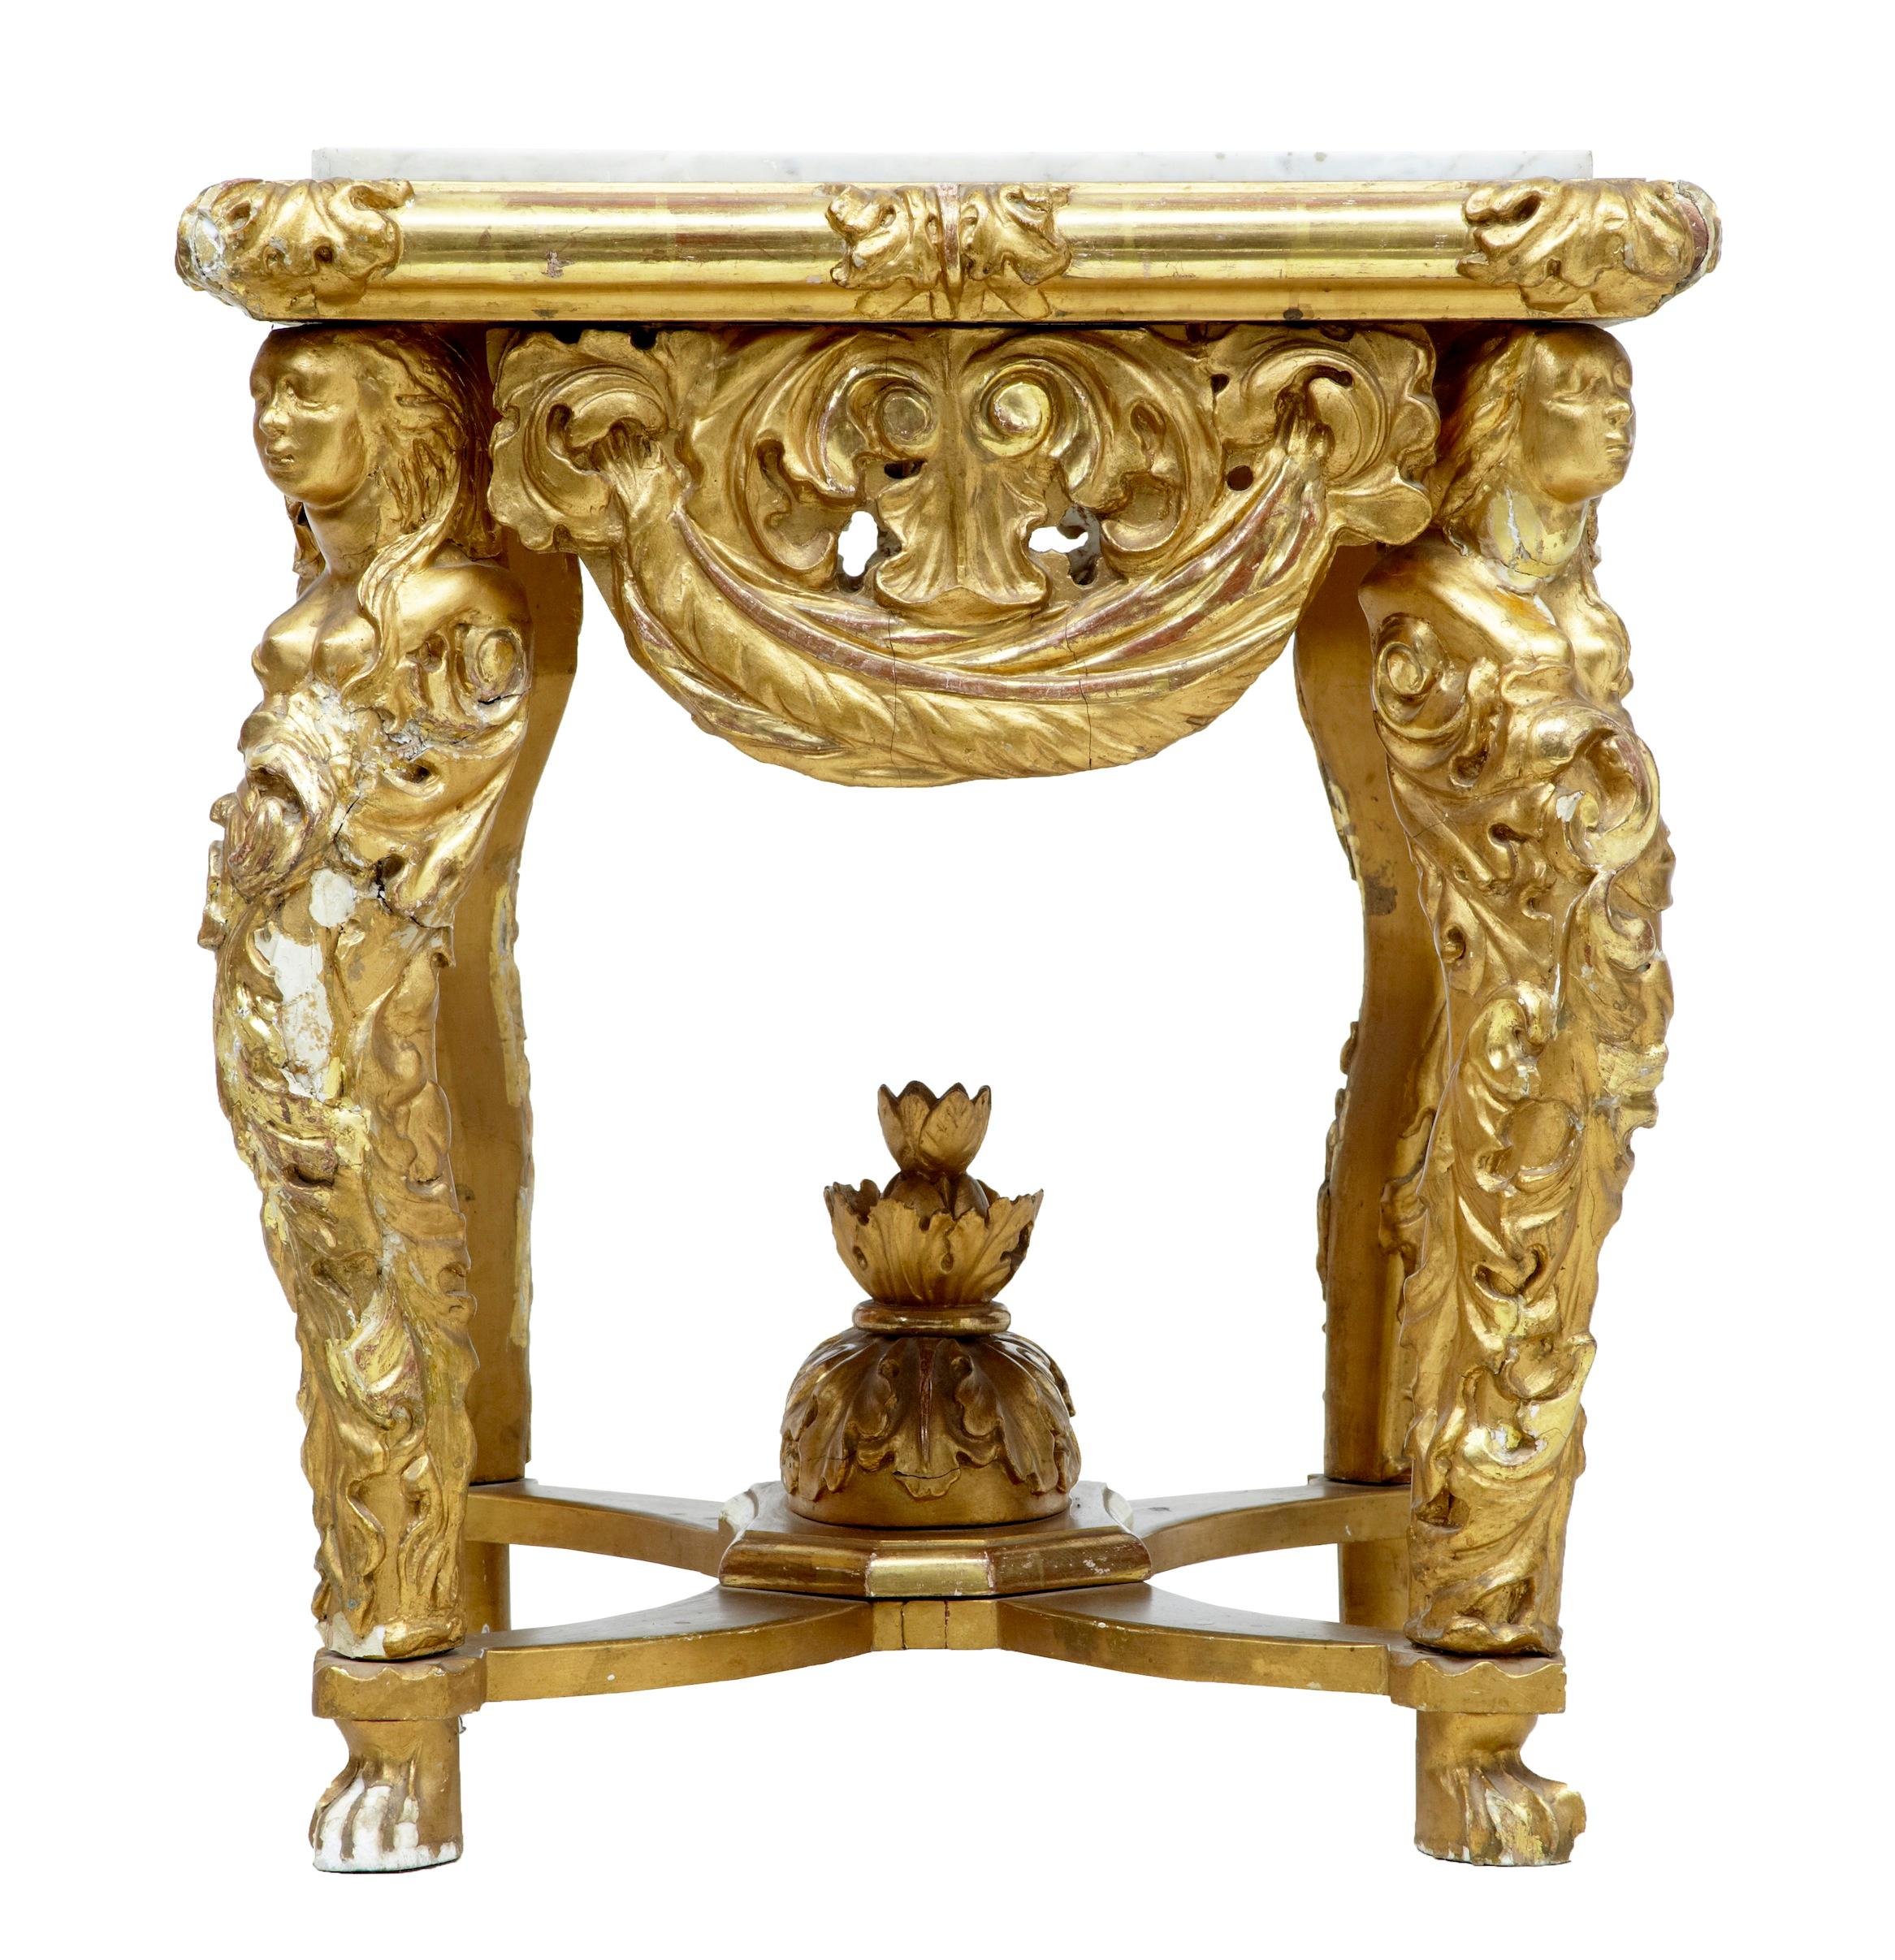 Renaissance Revival Italian 19th Century Carved Gilt Marble-Top Center Table